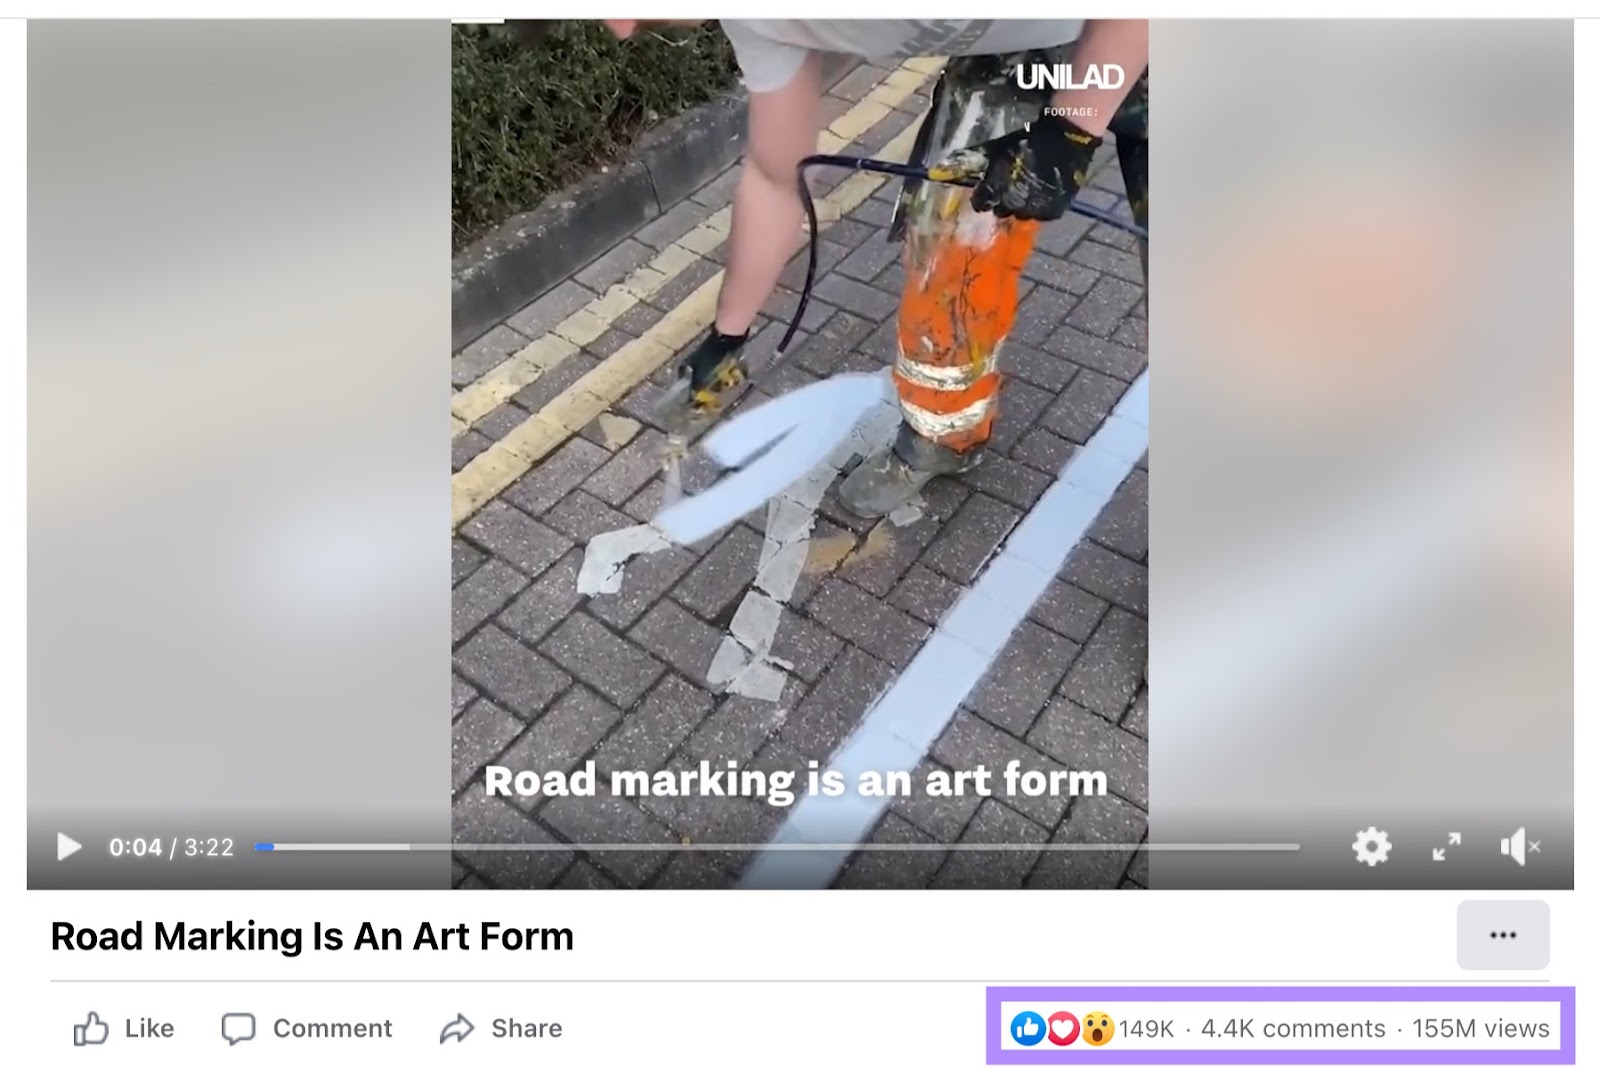 UNILAD's video on road marking